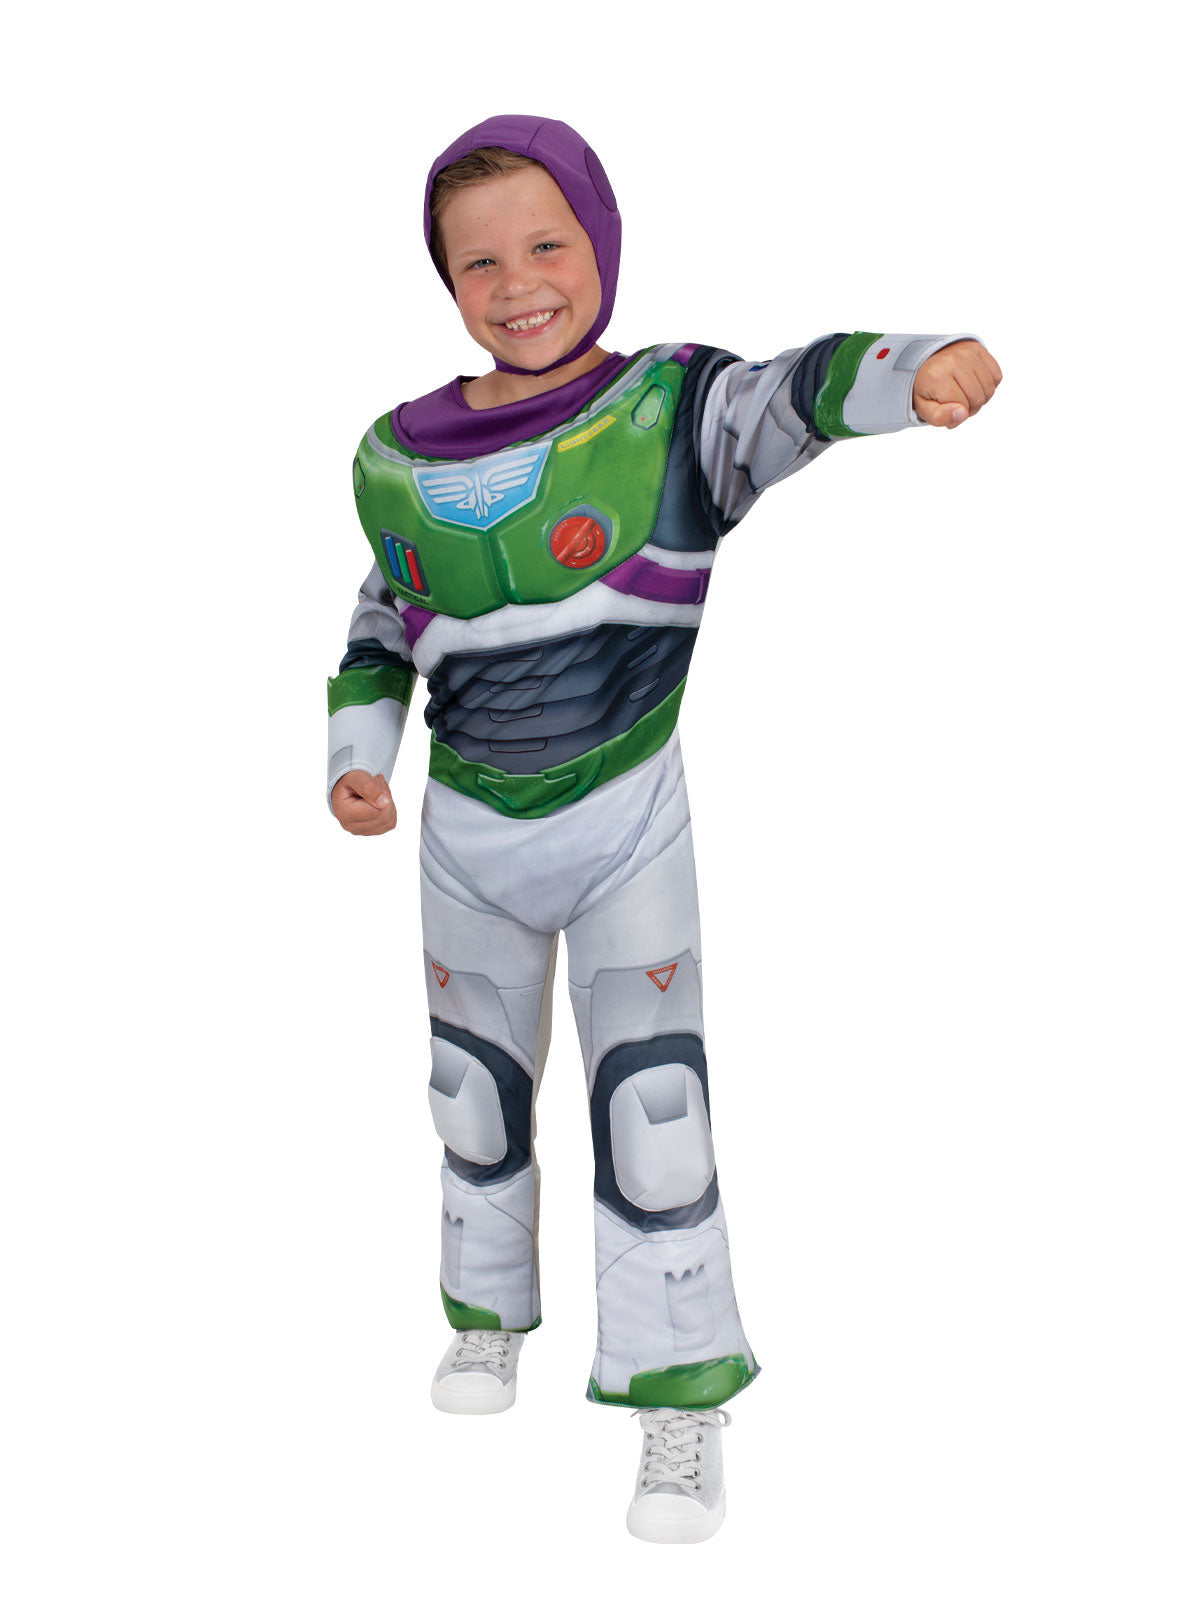 Buzz Lightyear Deluxe Costume for Kids - Disney Pixar Lightyear